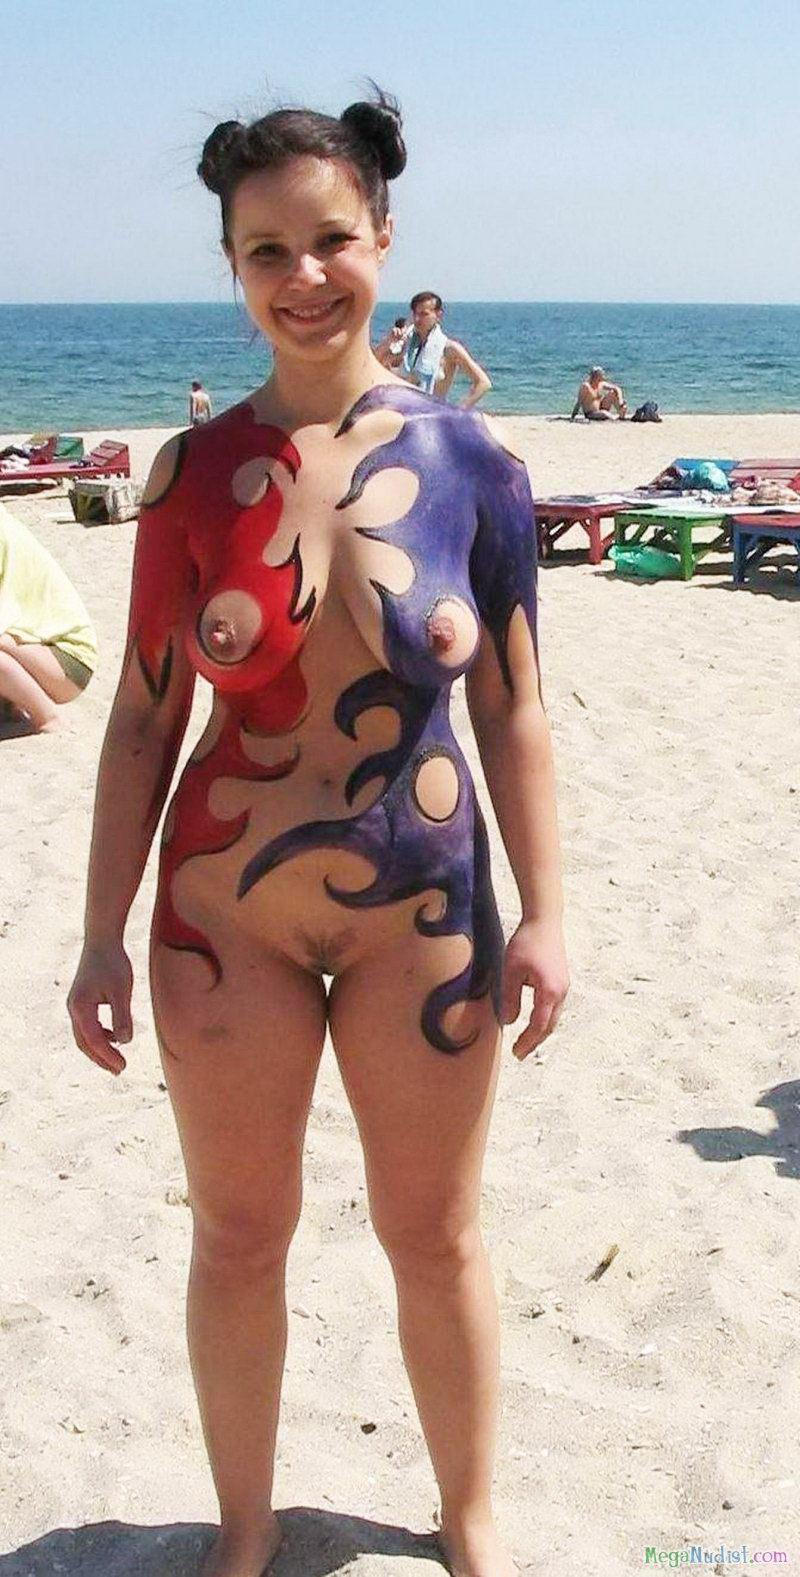 Body Art of nudists and naturists